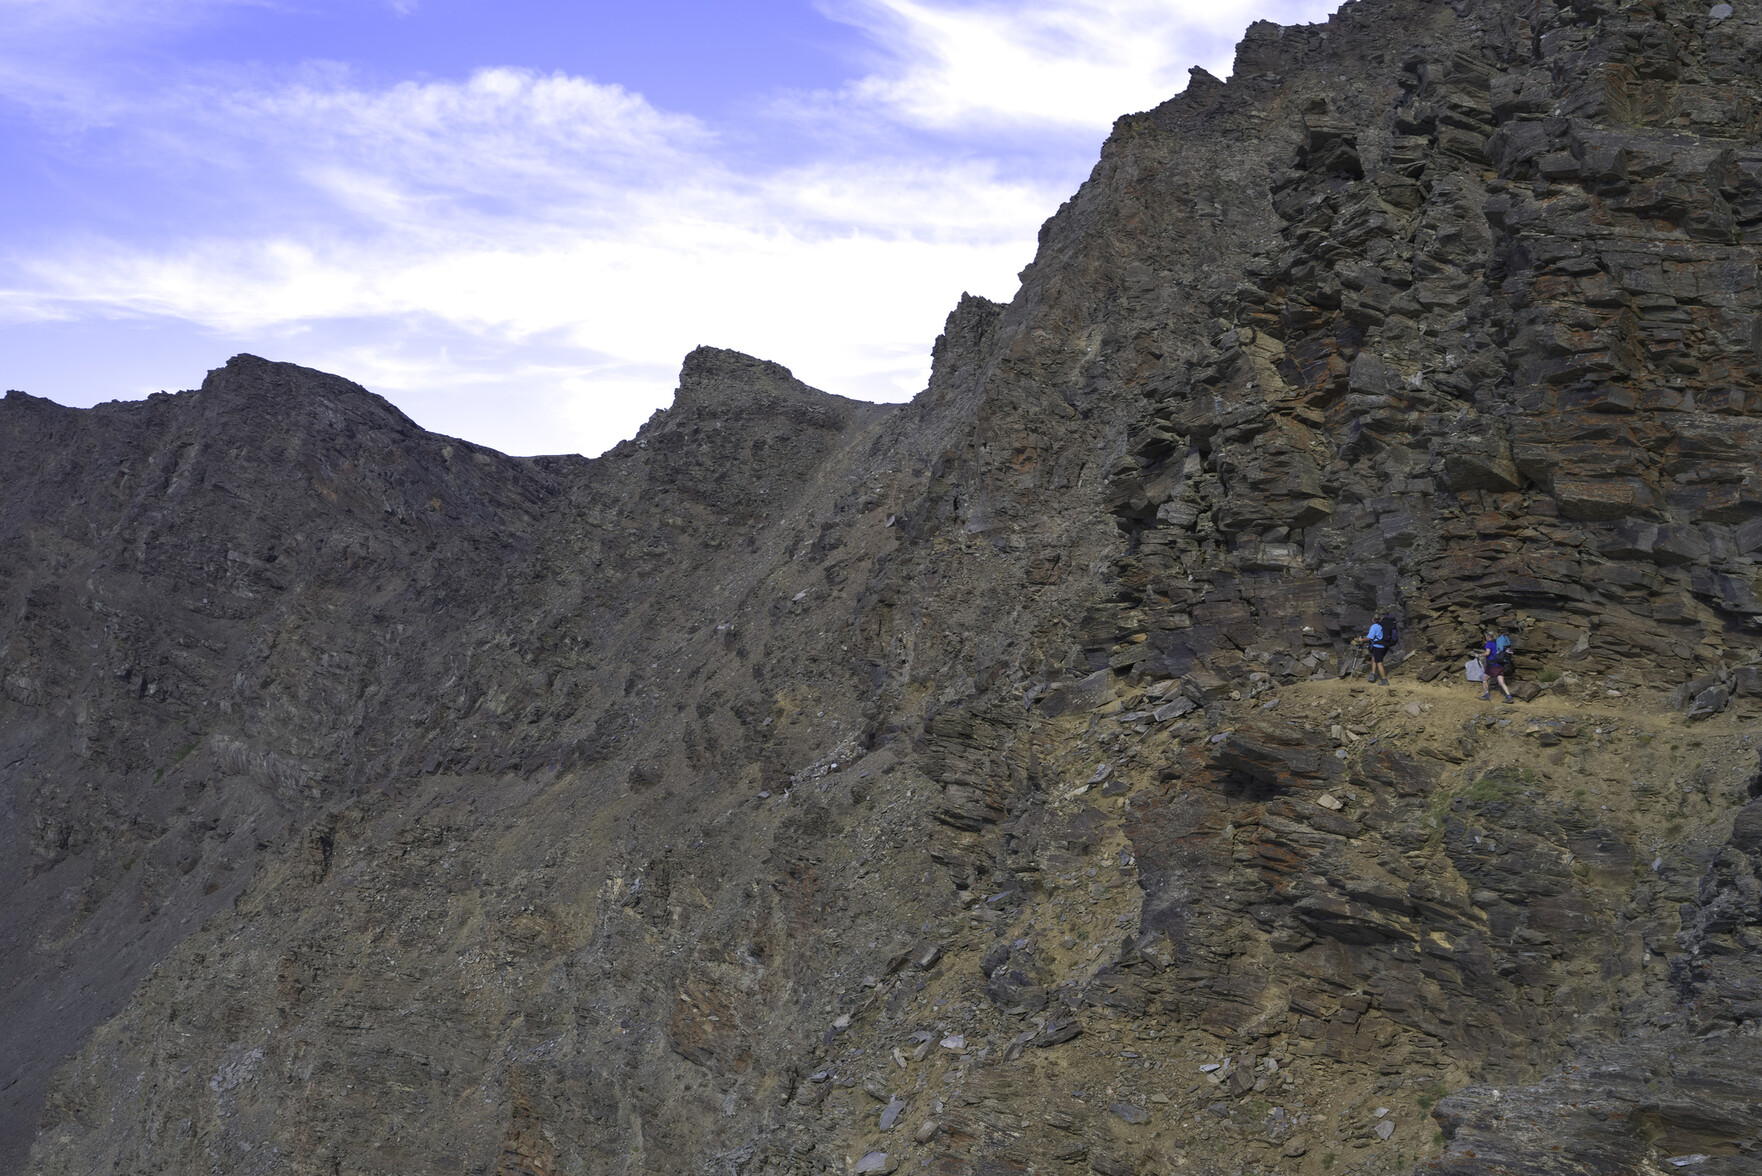 Some hikers walk along a narrow ledge across a mountain face